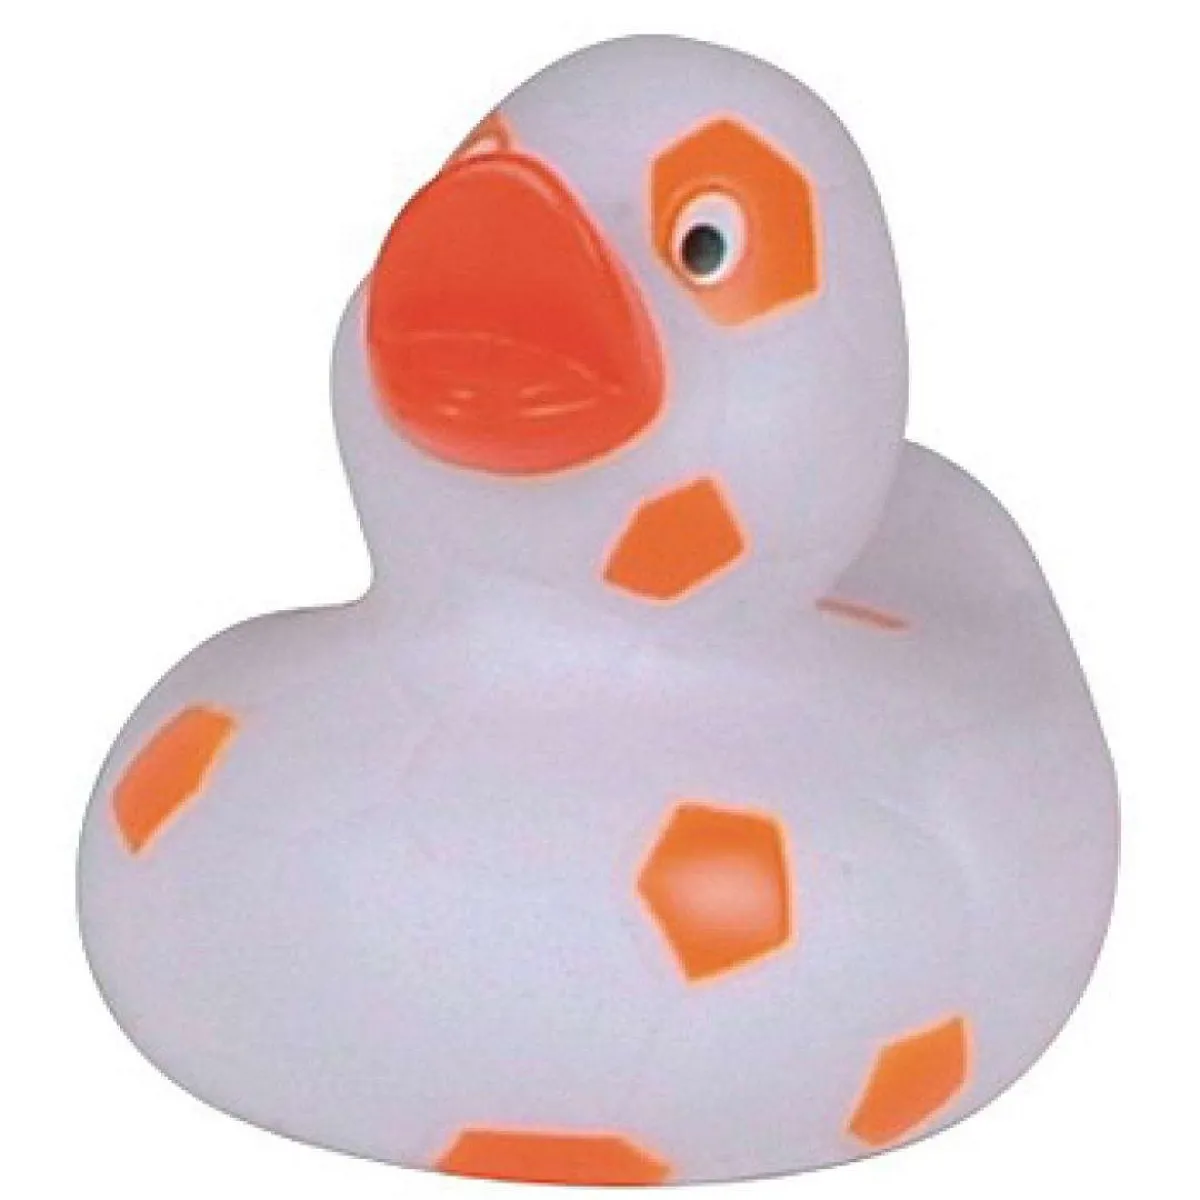 Bath duck - squeaky duck football